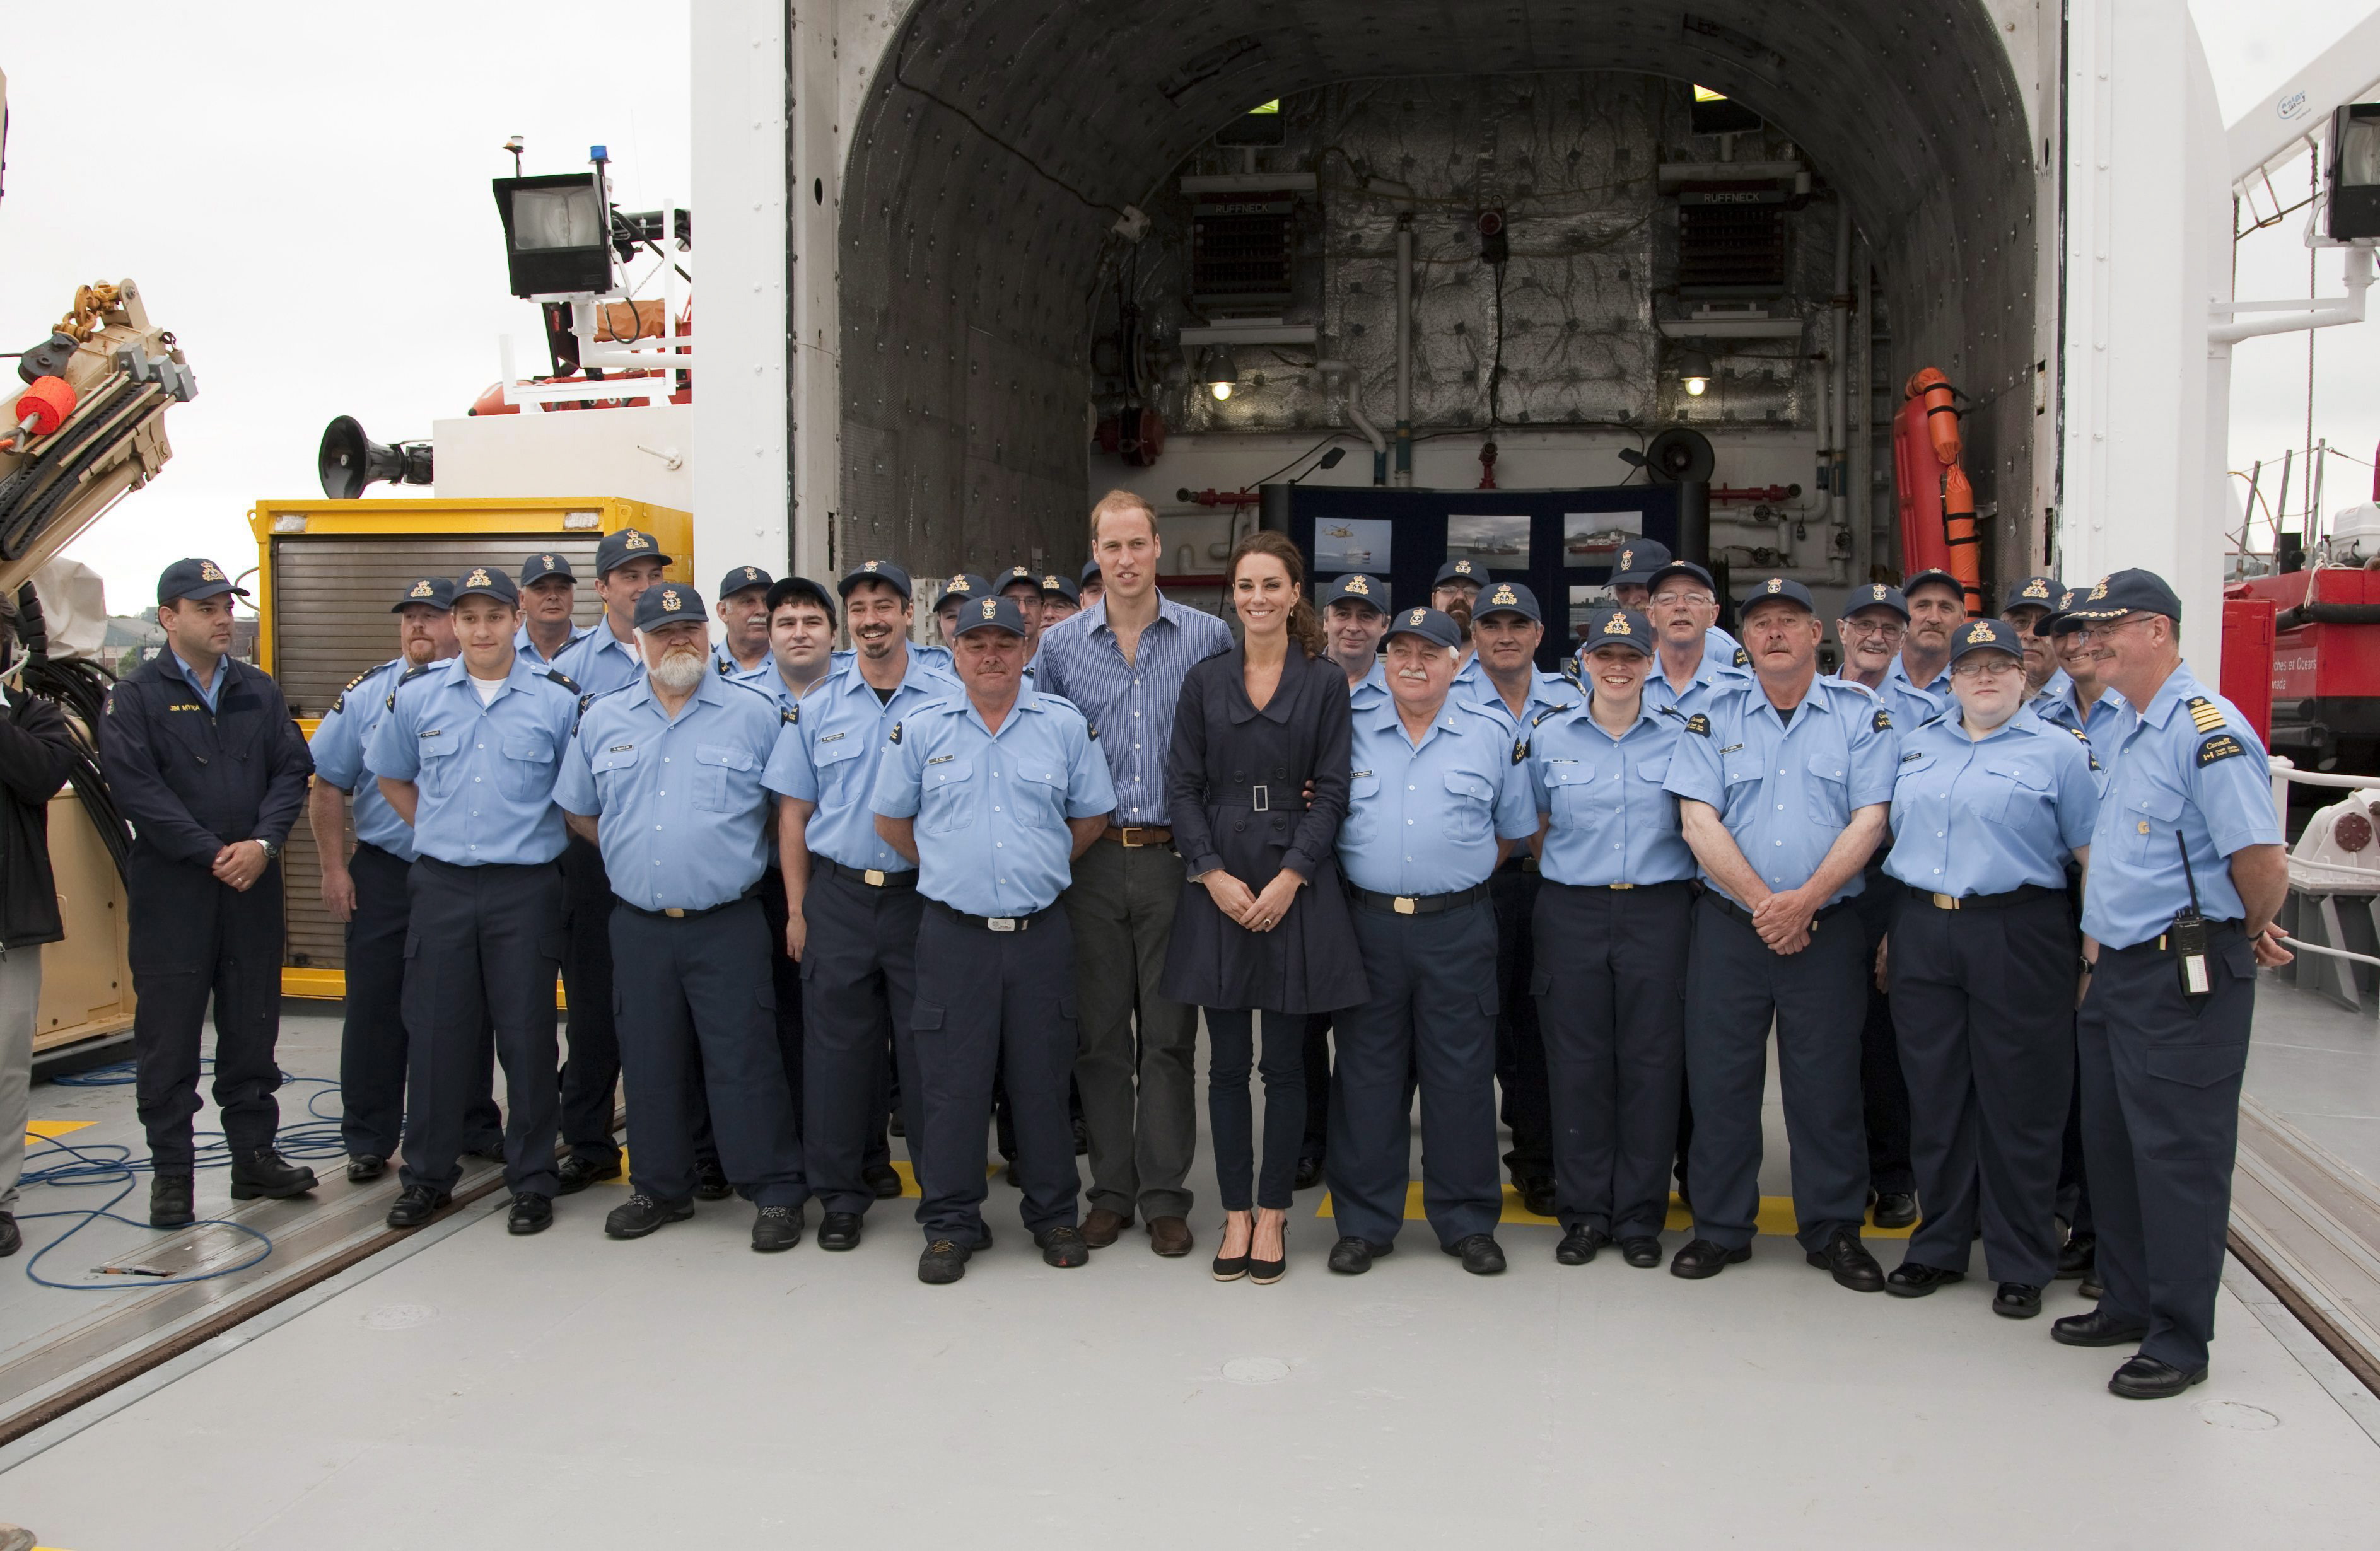 canadian-coast-guard-partners-with-mi-kmaq-to-rename-icebreaker-rci-english